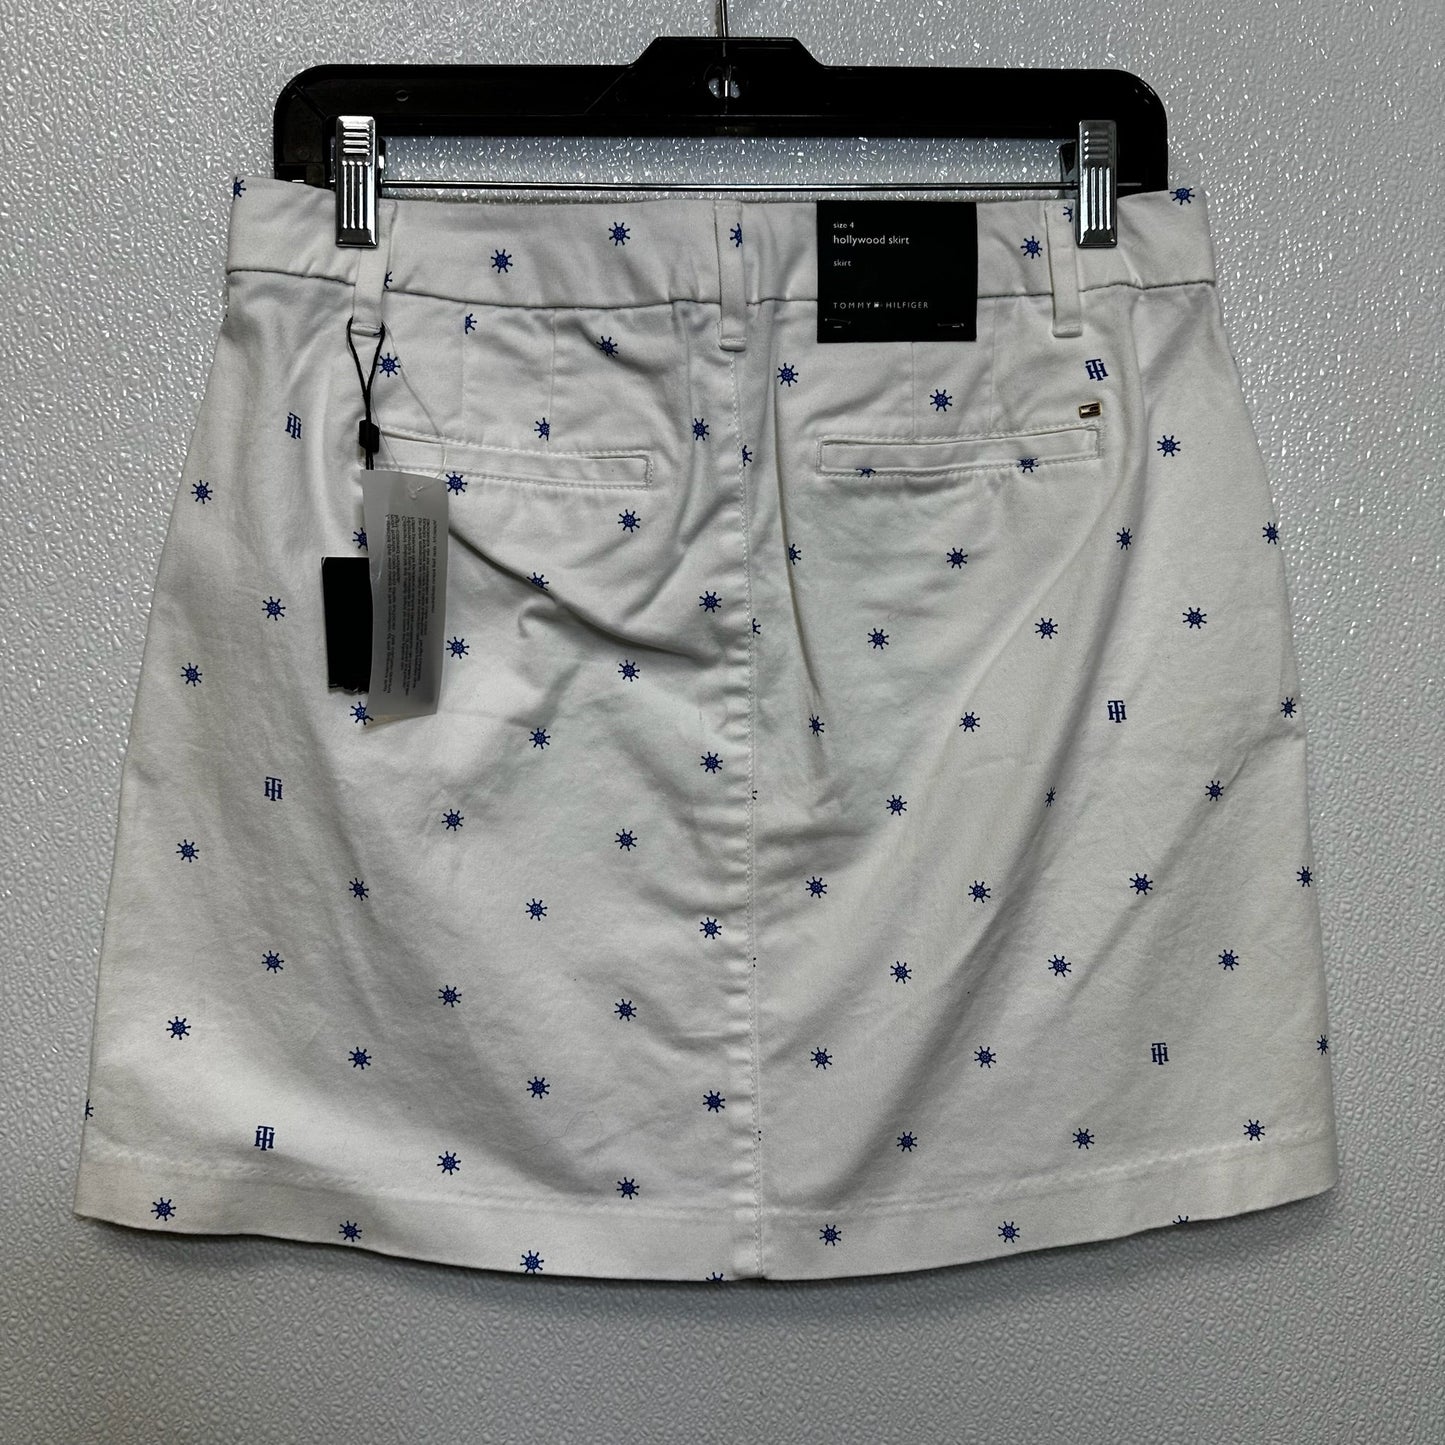 White Skirt Mini & Short Tommy Hilfiger O, Size 4